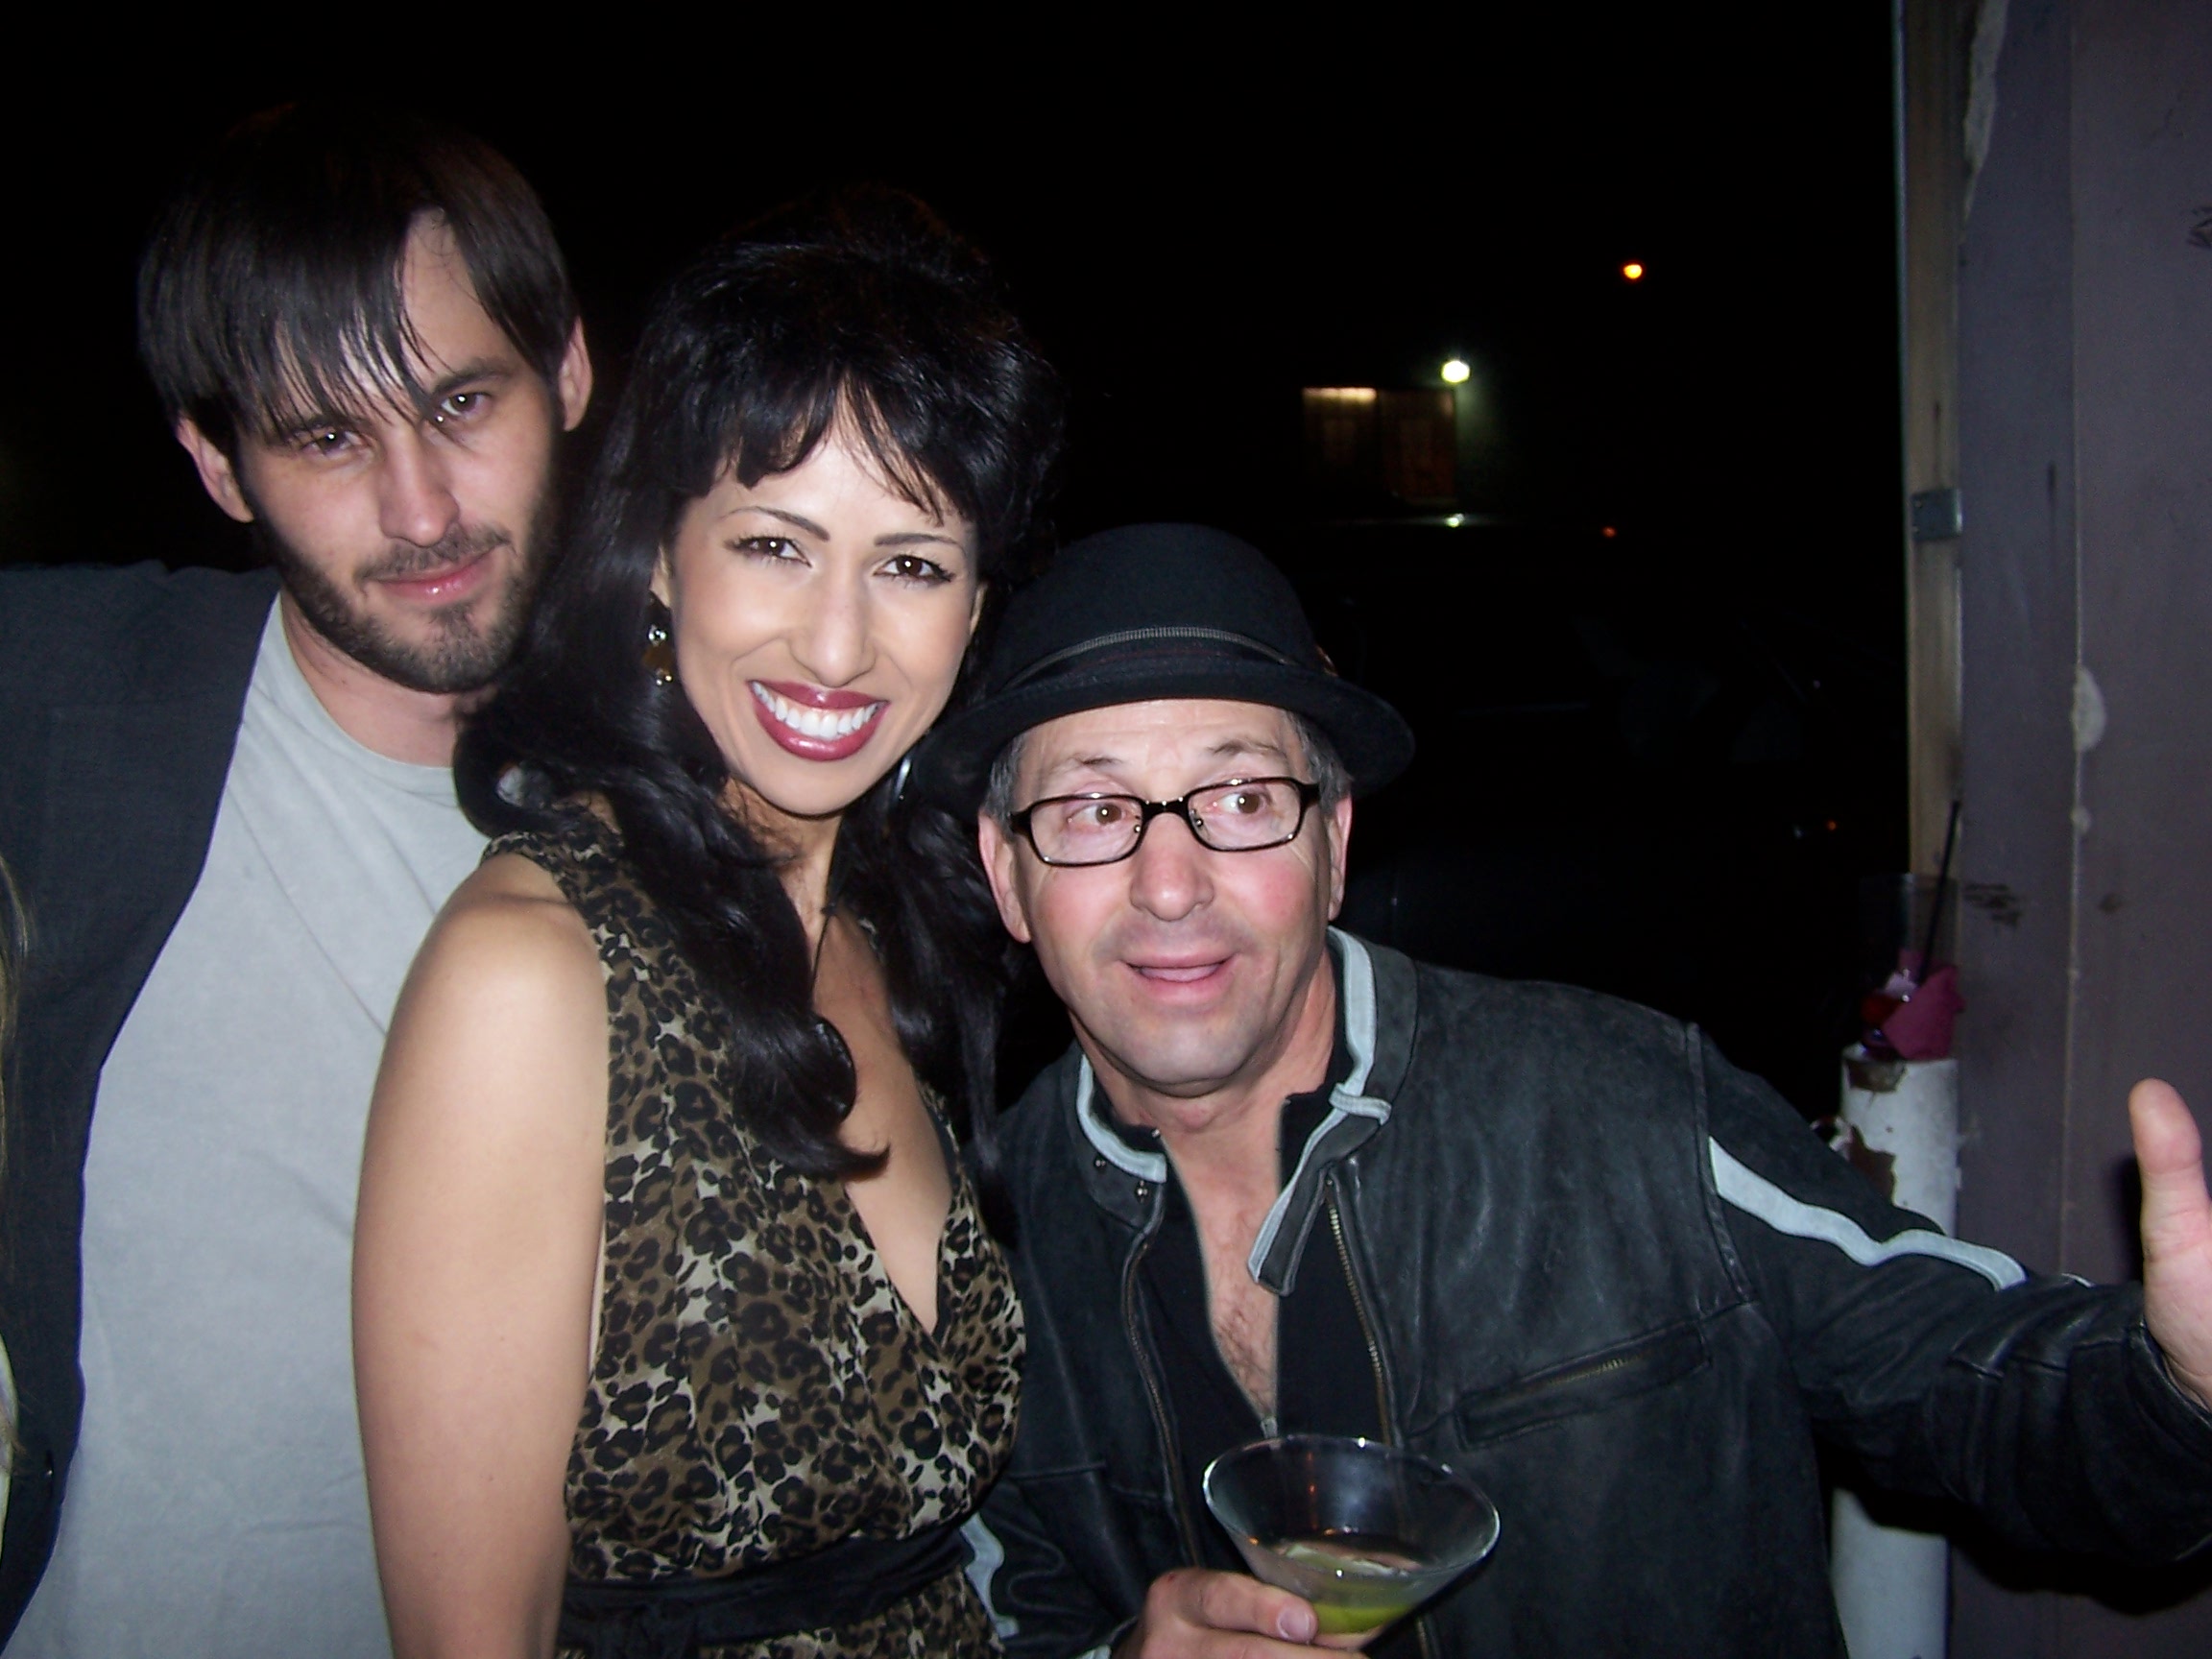 Elly Kaye with Derek Pratt and Johnny Venokur at a Hollywood Party